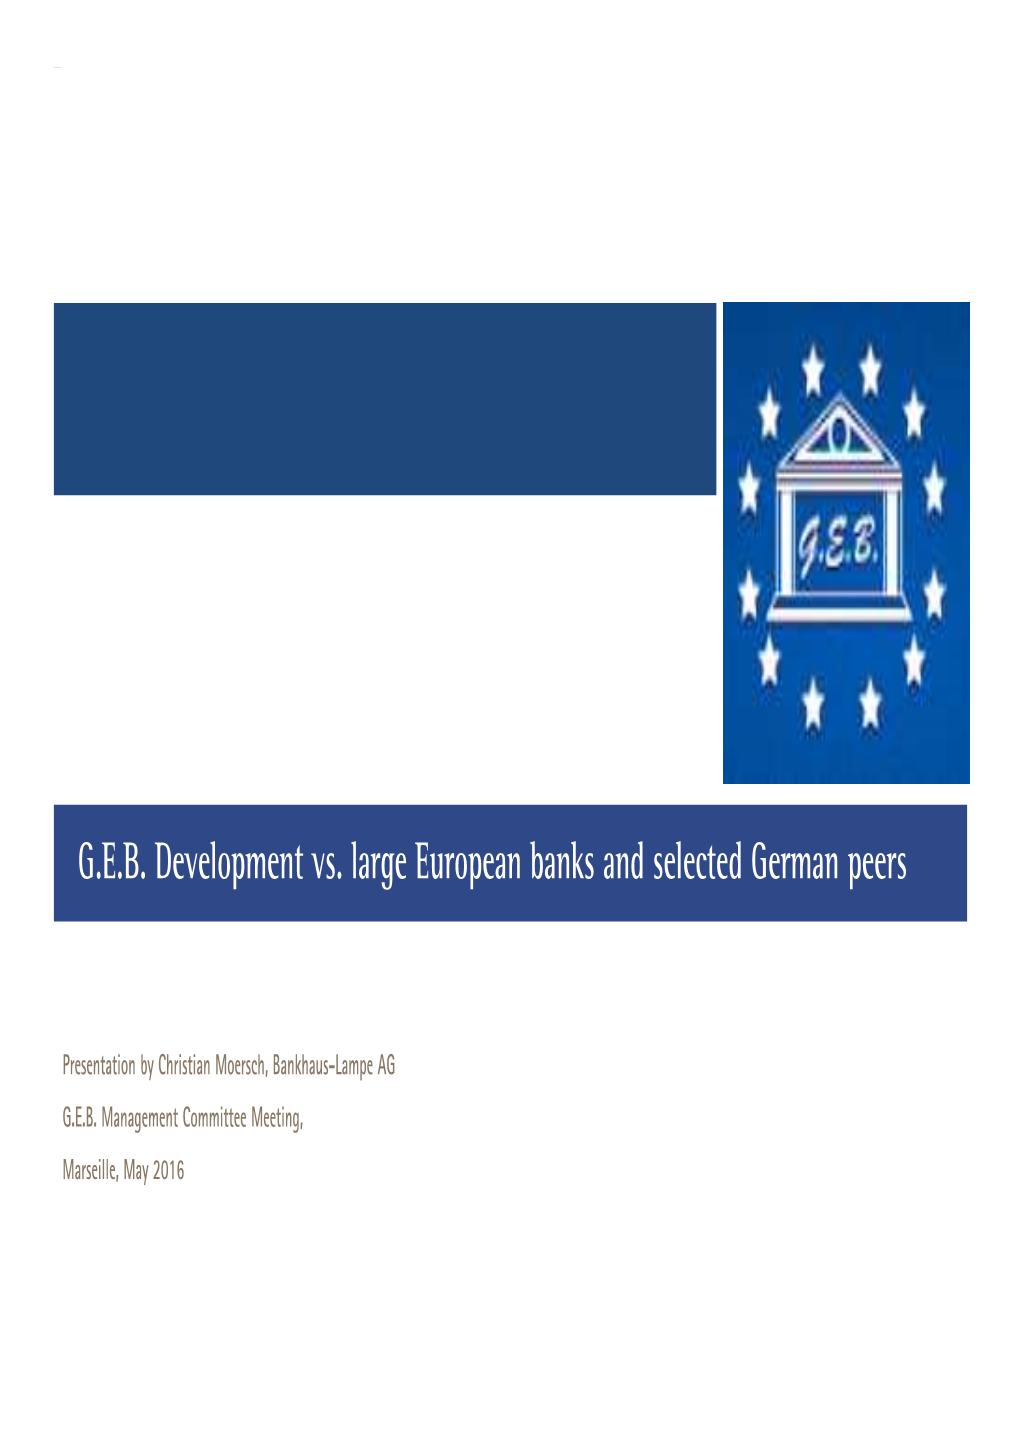 GEB Development Vs. Large European Banks and Selected German Peers